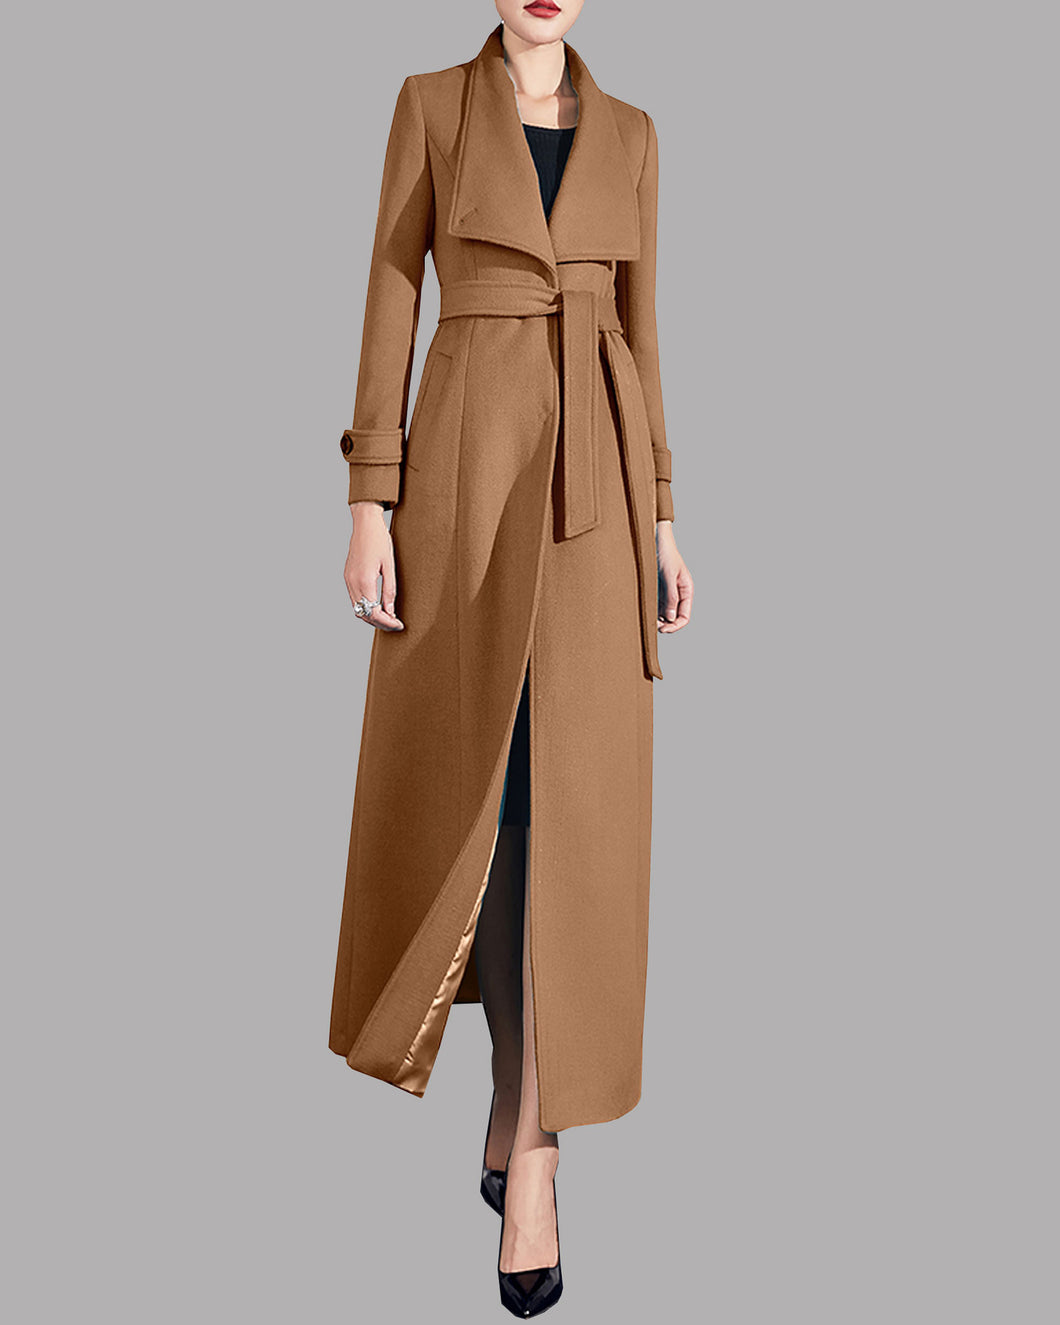 Women jacket with belt, long jacket, wool coat, winter coat, coat dress, long designer coat, warm coat, plus size coat Y0022